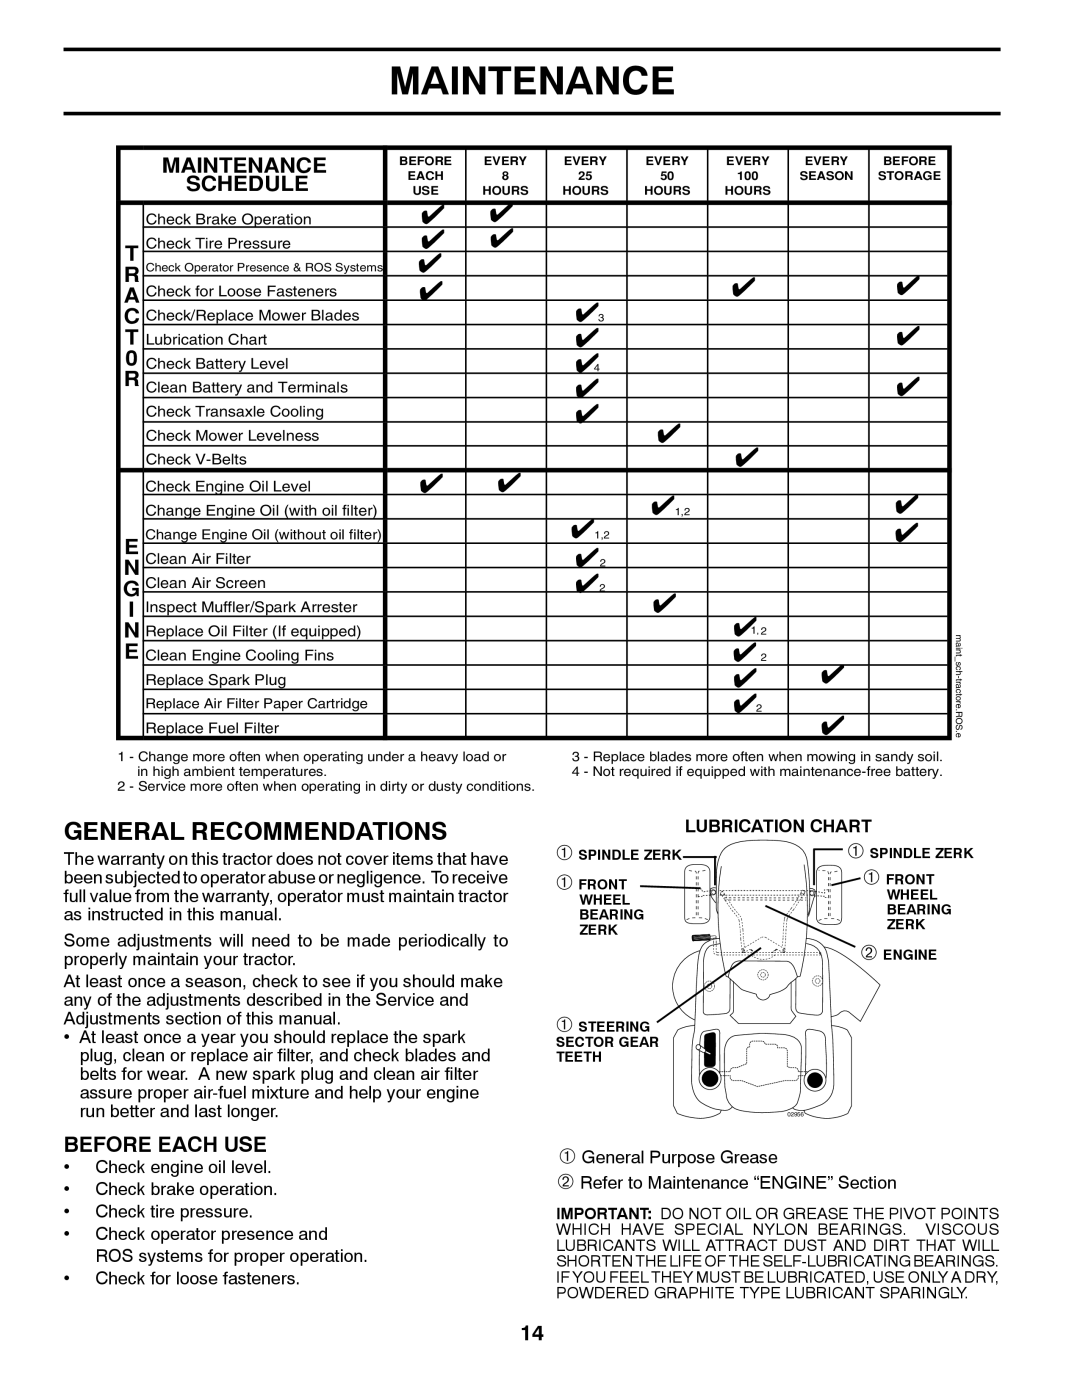 Husqvarna 2246LS owner manual Maintenance, Lubrication Chart 